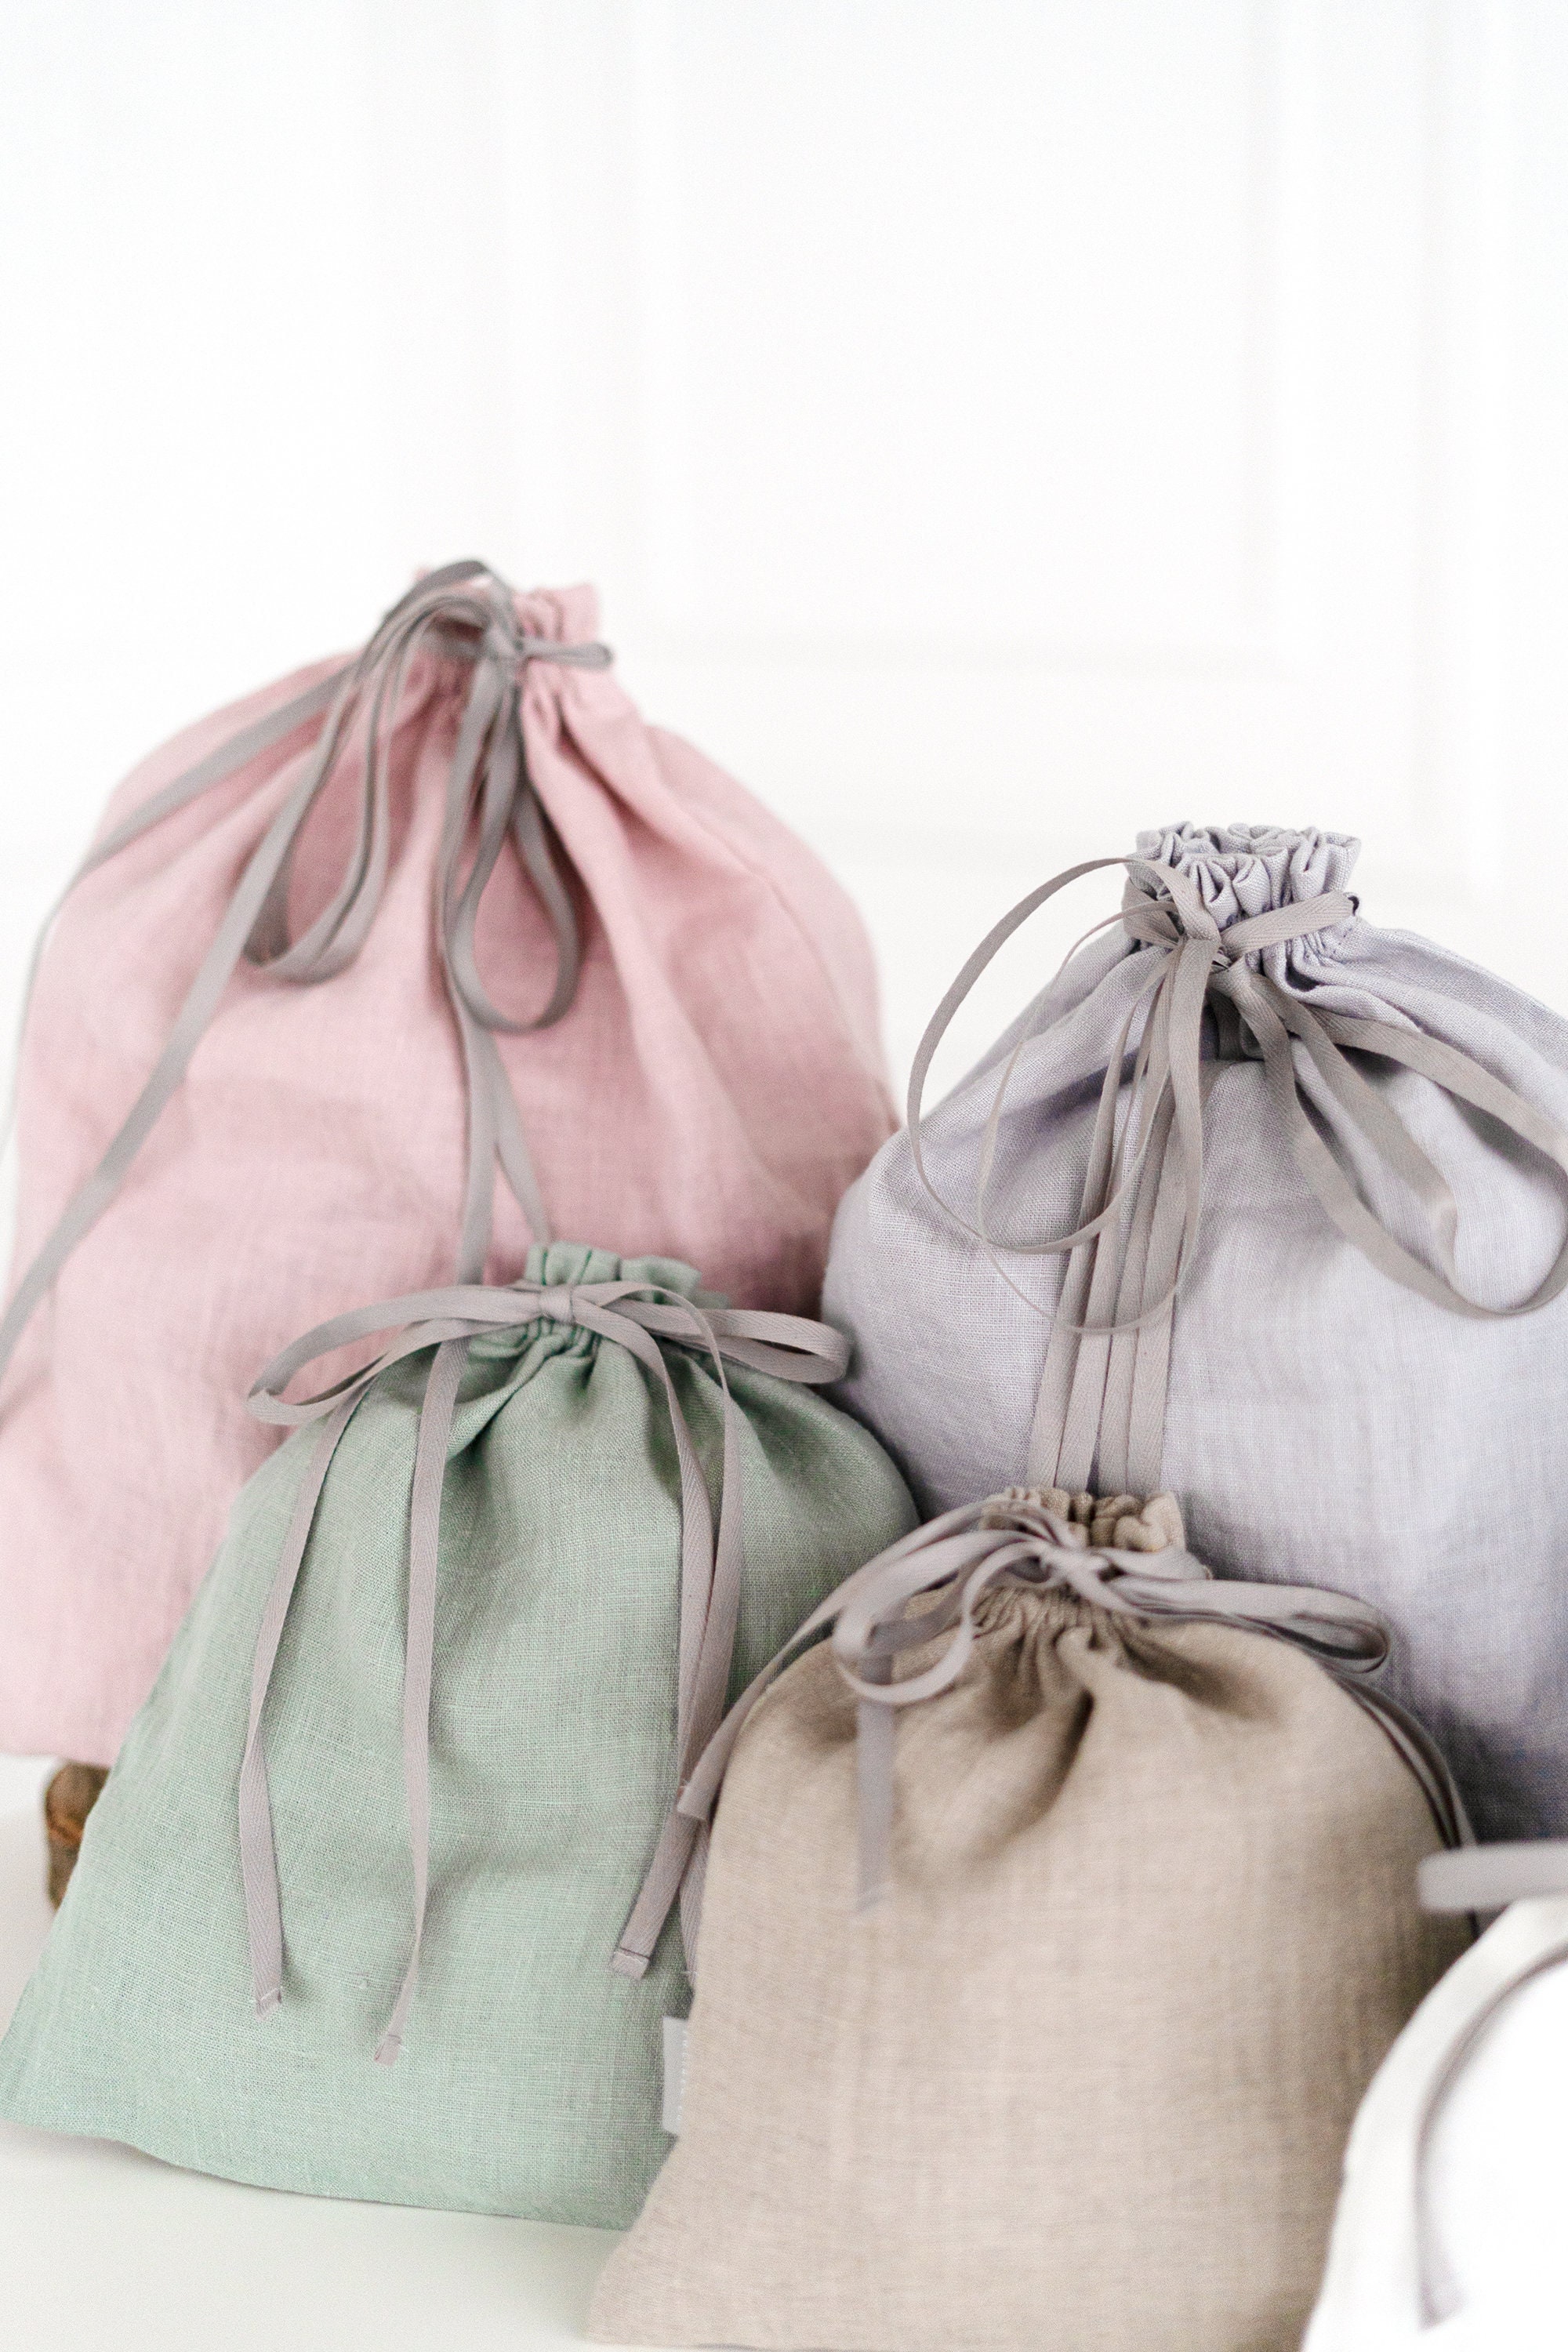 cHaNeL 💫 Drawstring Dust Bag Shoe Bag Travel Bag Dustbag Tie Storage